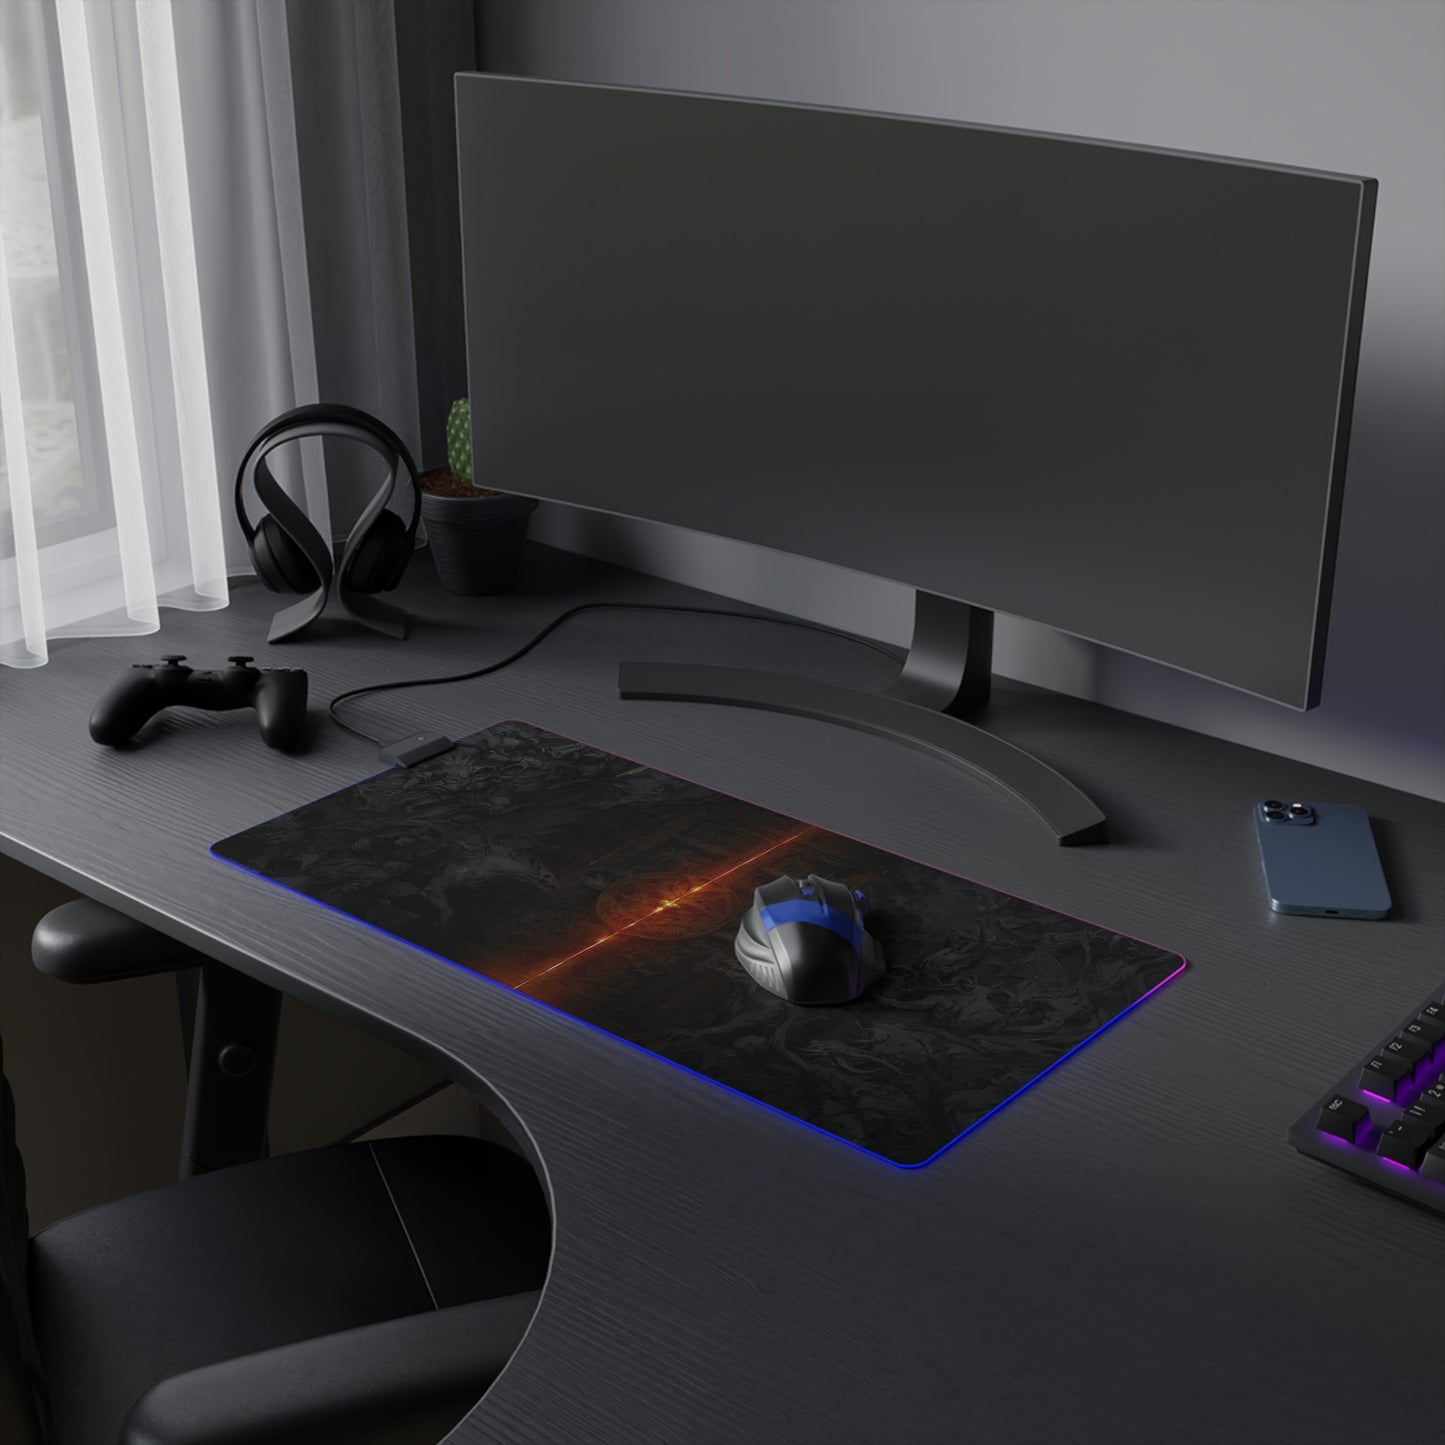 Diablo IV 002 LED Gaming Mouse Pad